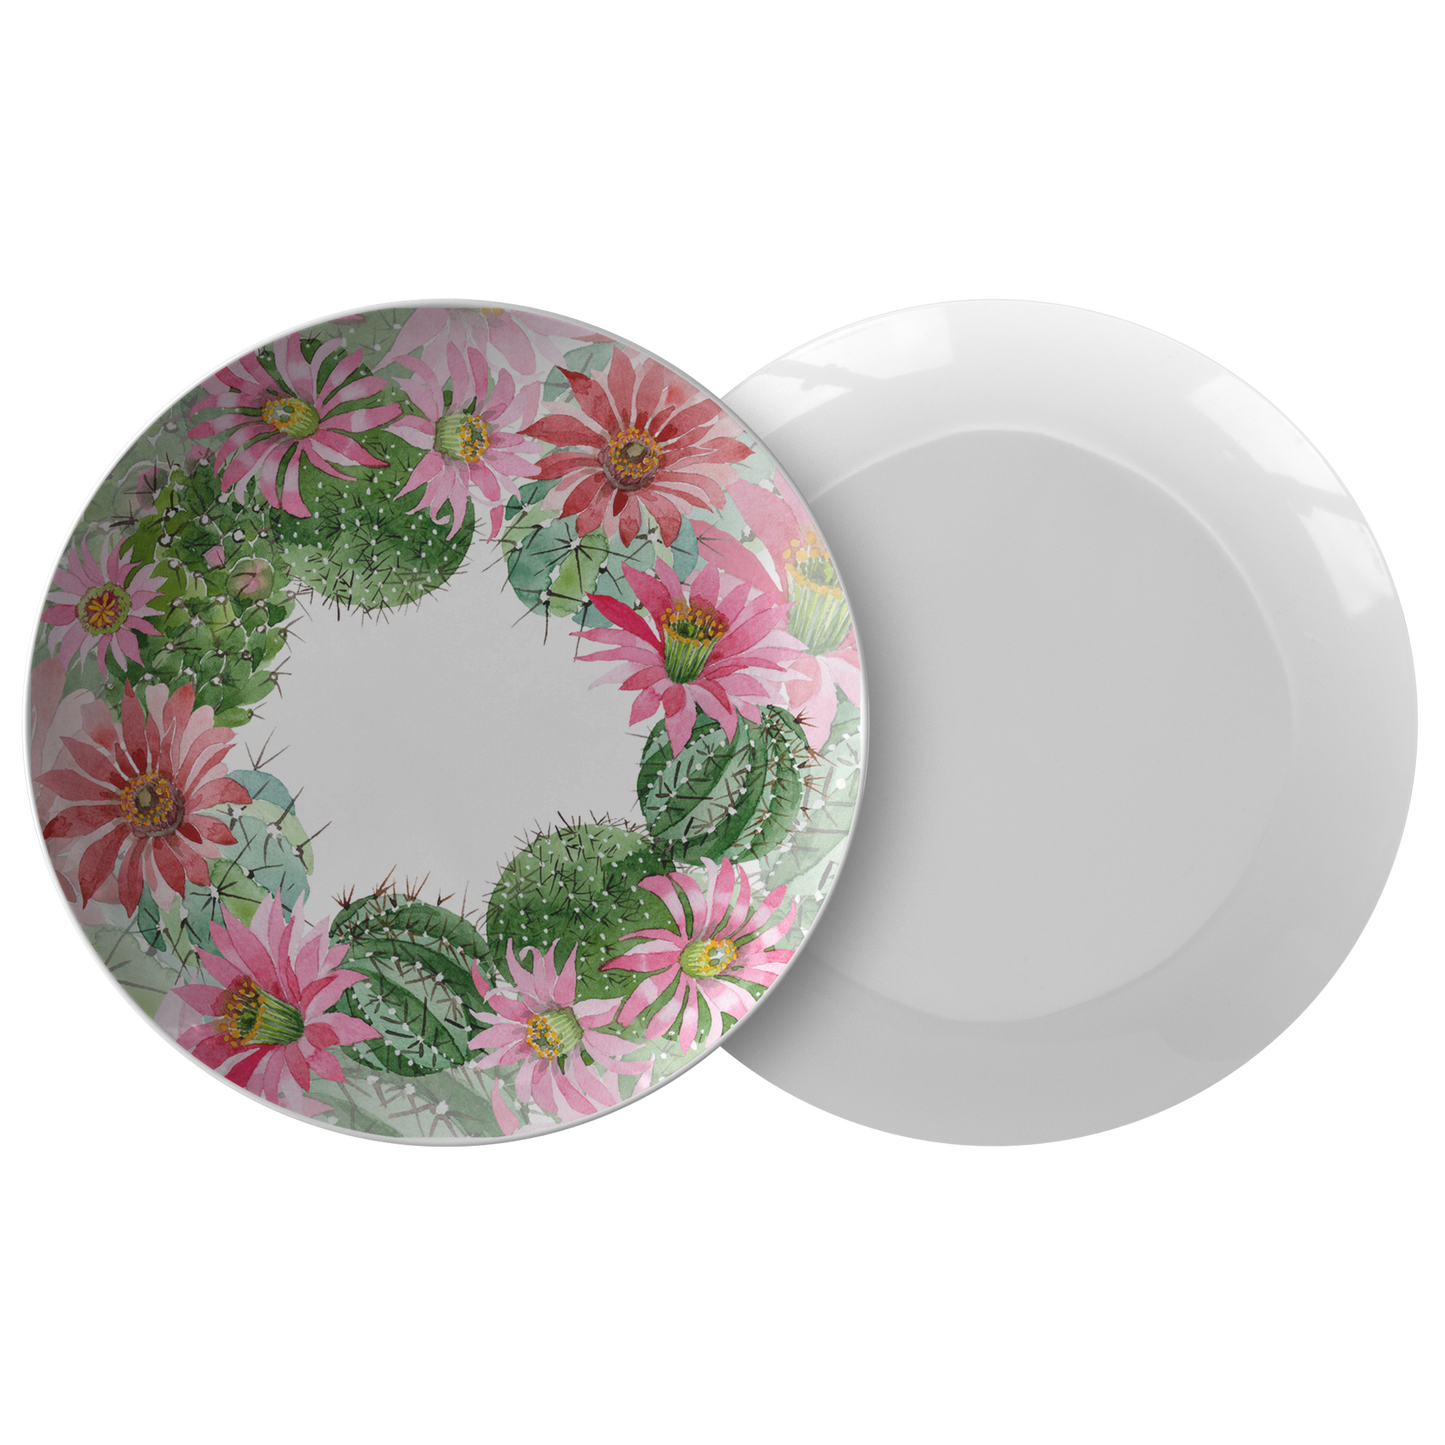 Beautiful Succulent and Desert Flowers Decorative Plate